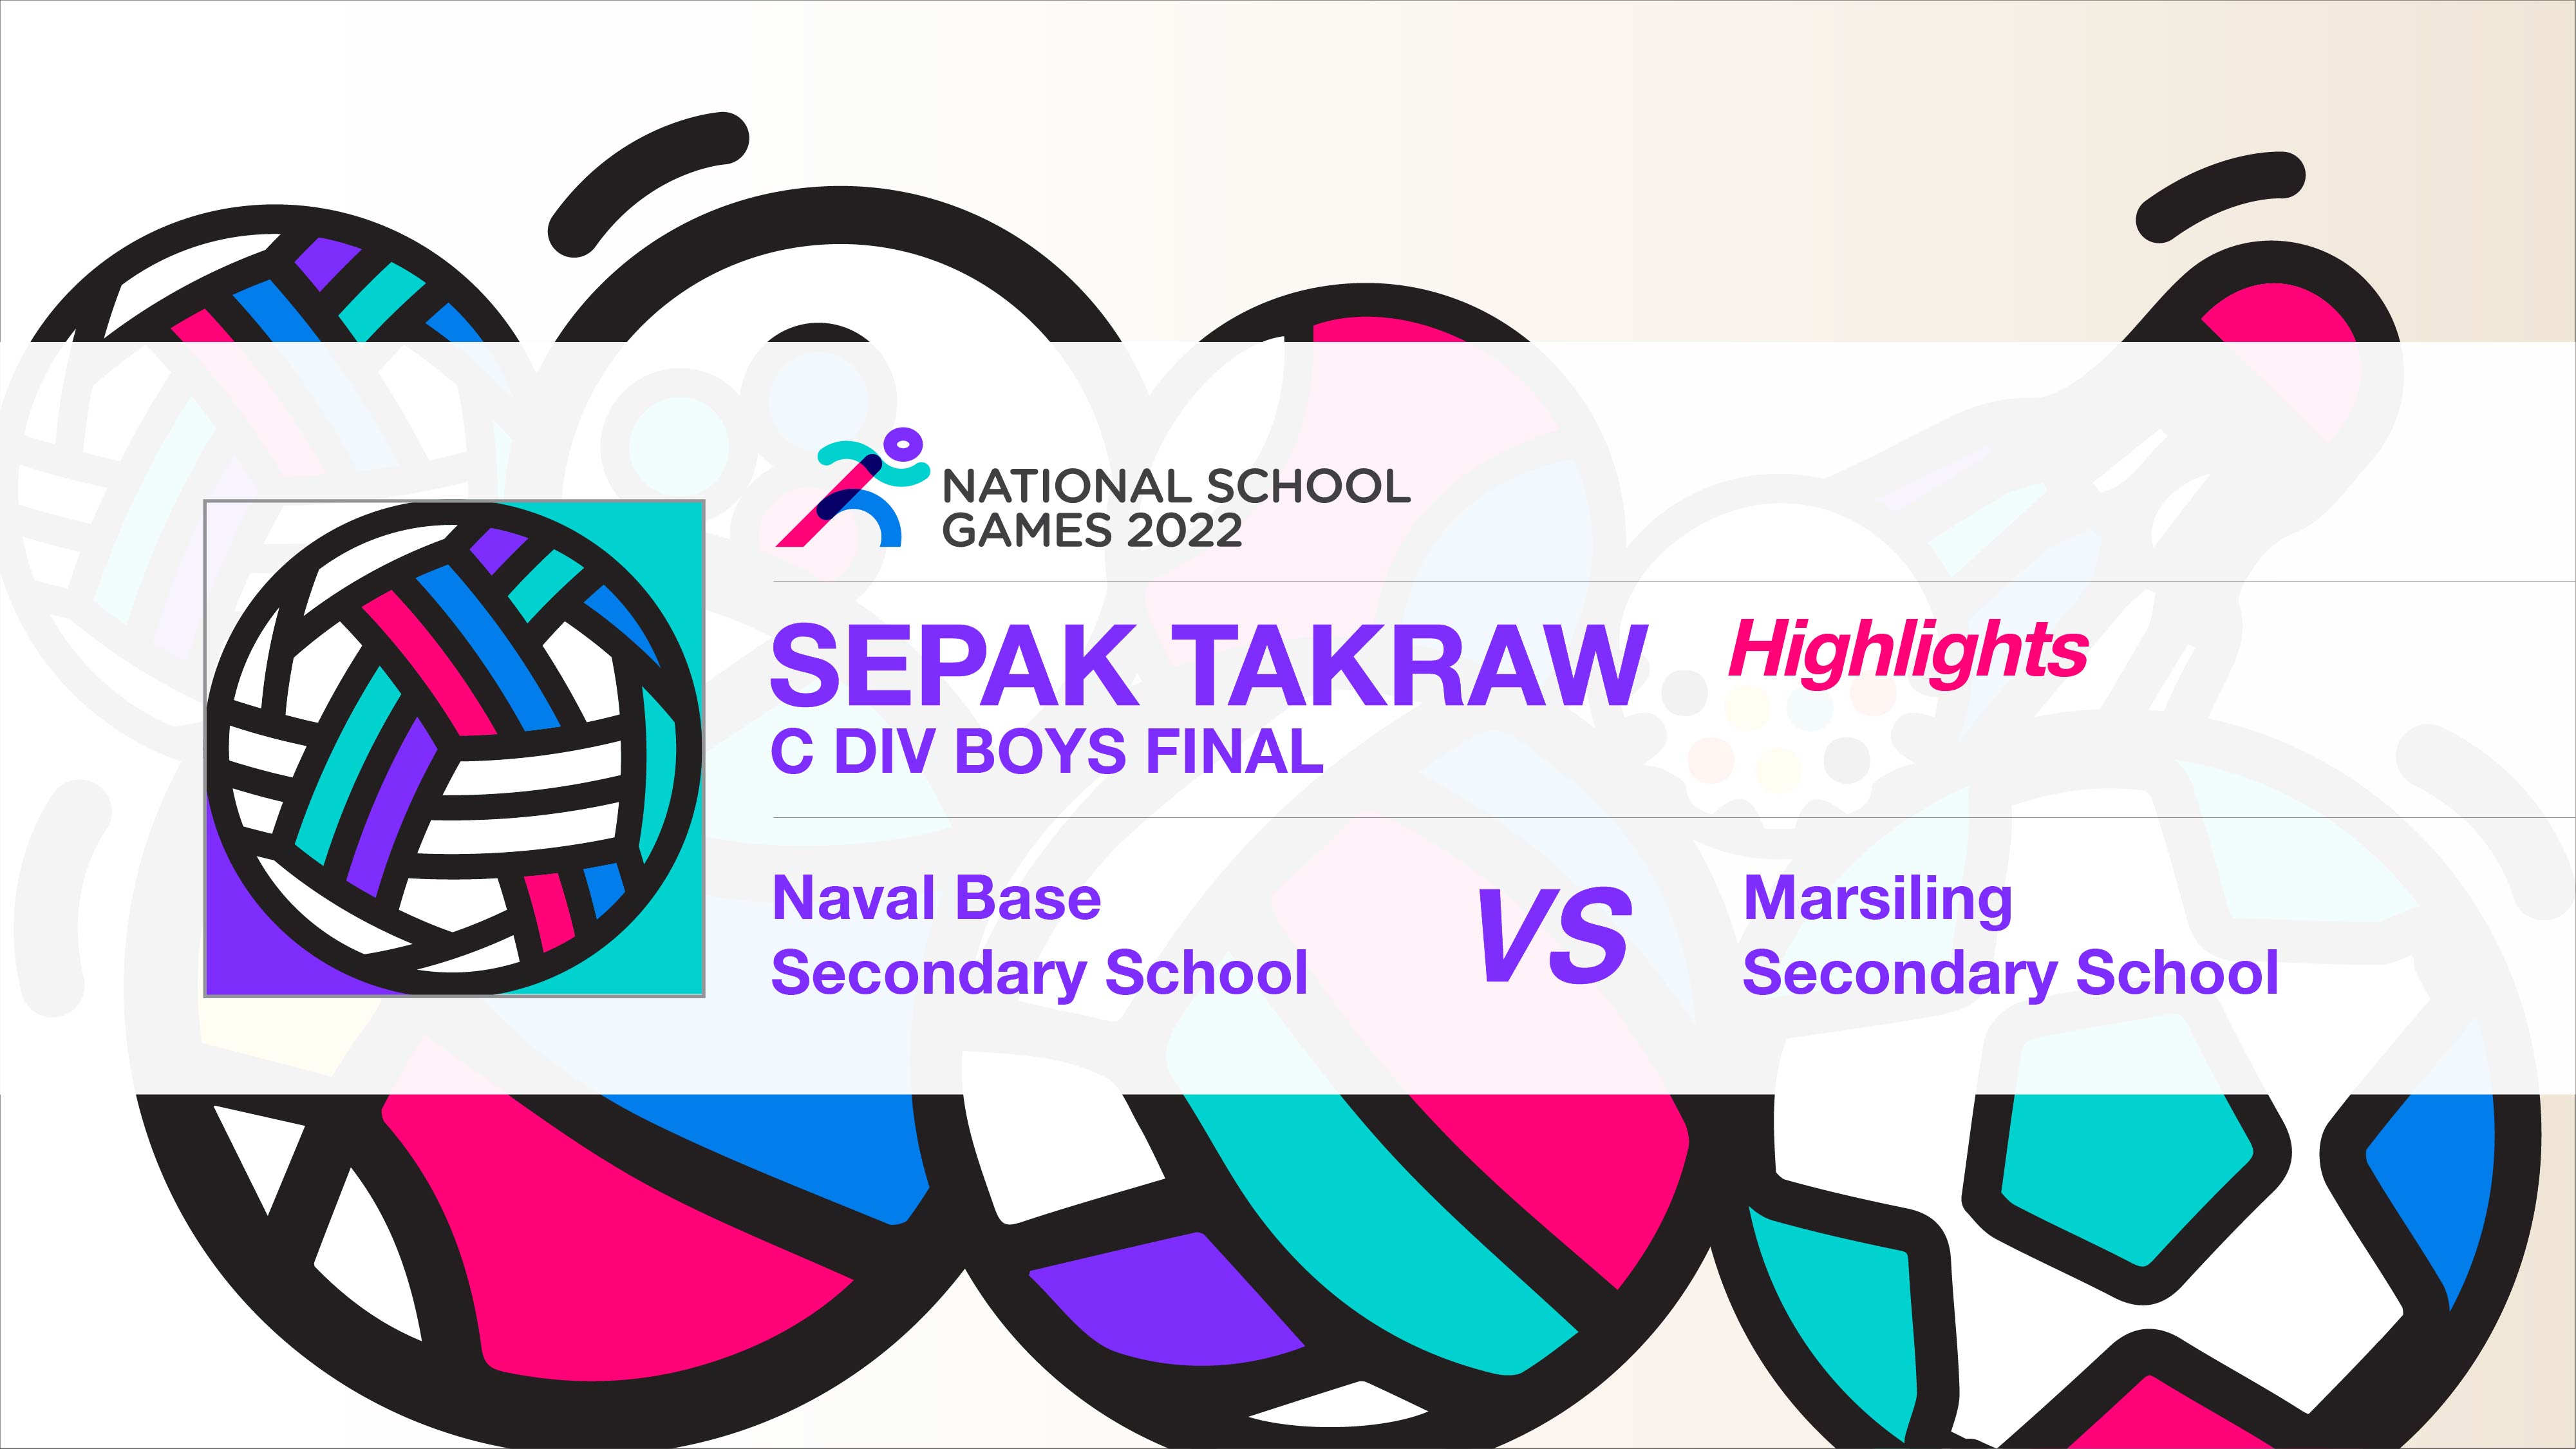 SSSC Sepak Takraw National C Division Boys Final | Naval Base Secondary School vs Marsiling Secondary School - Highlights